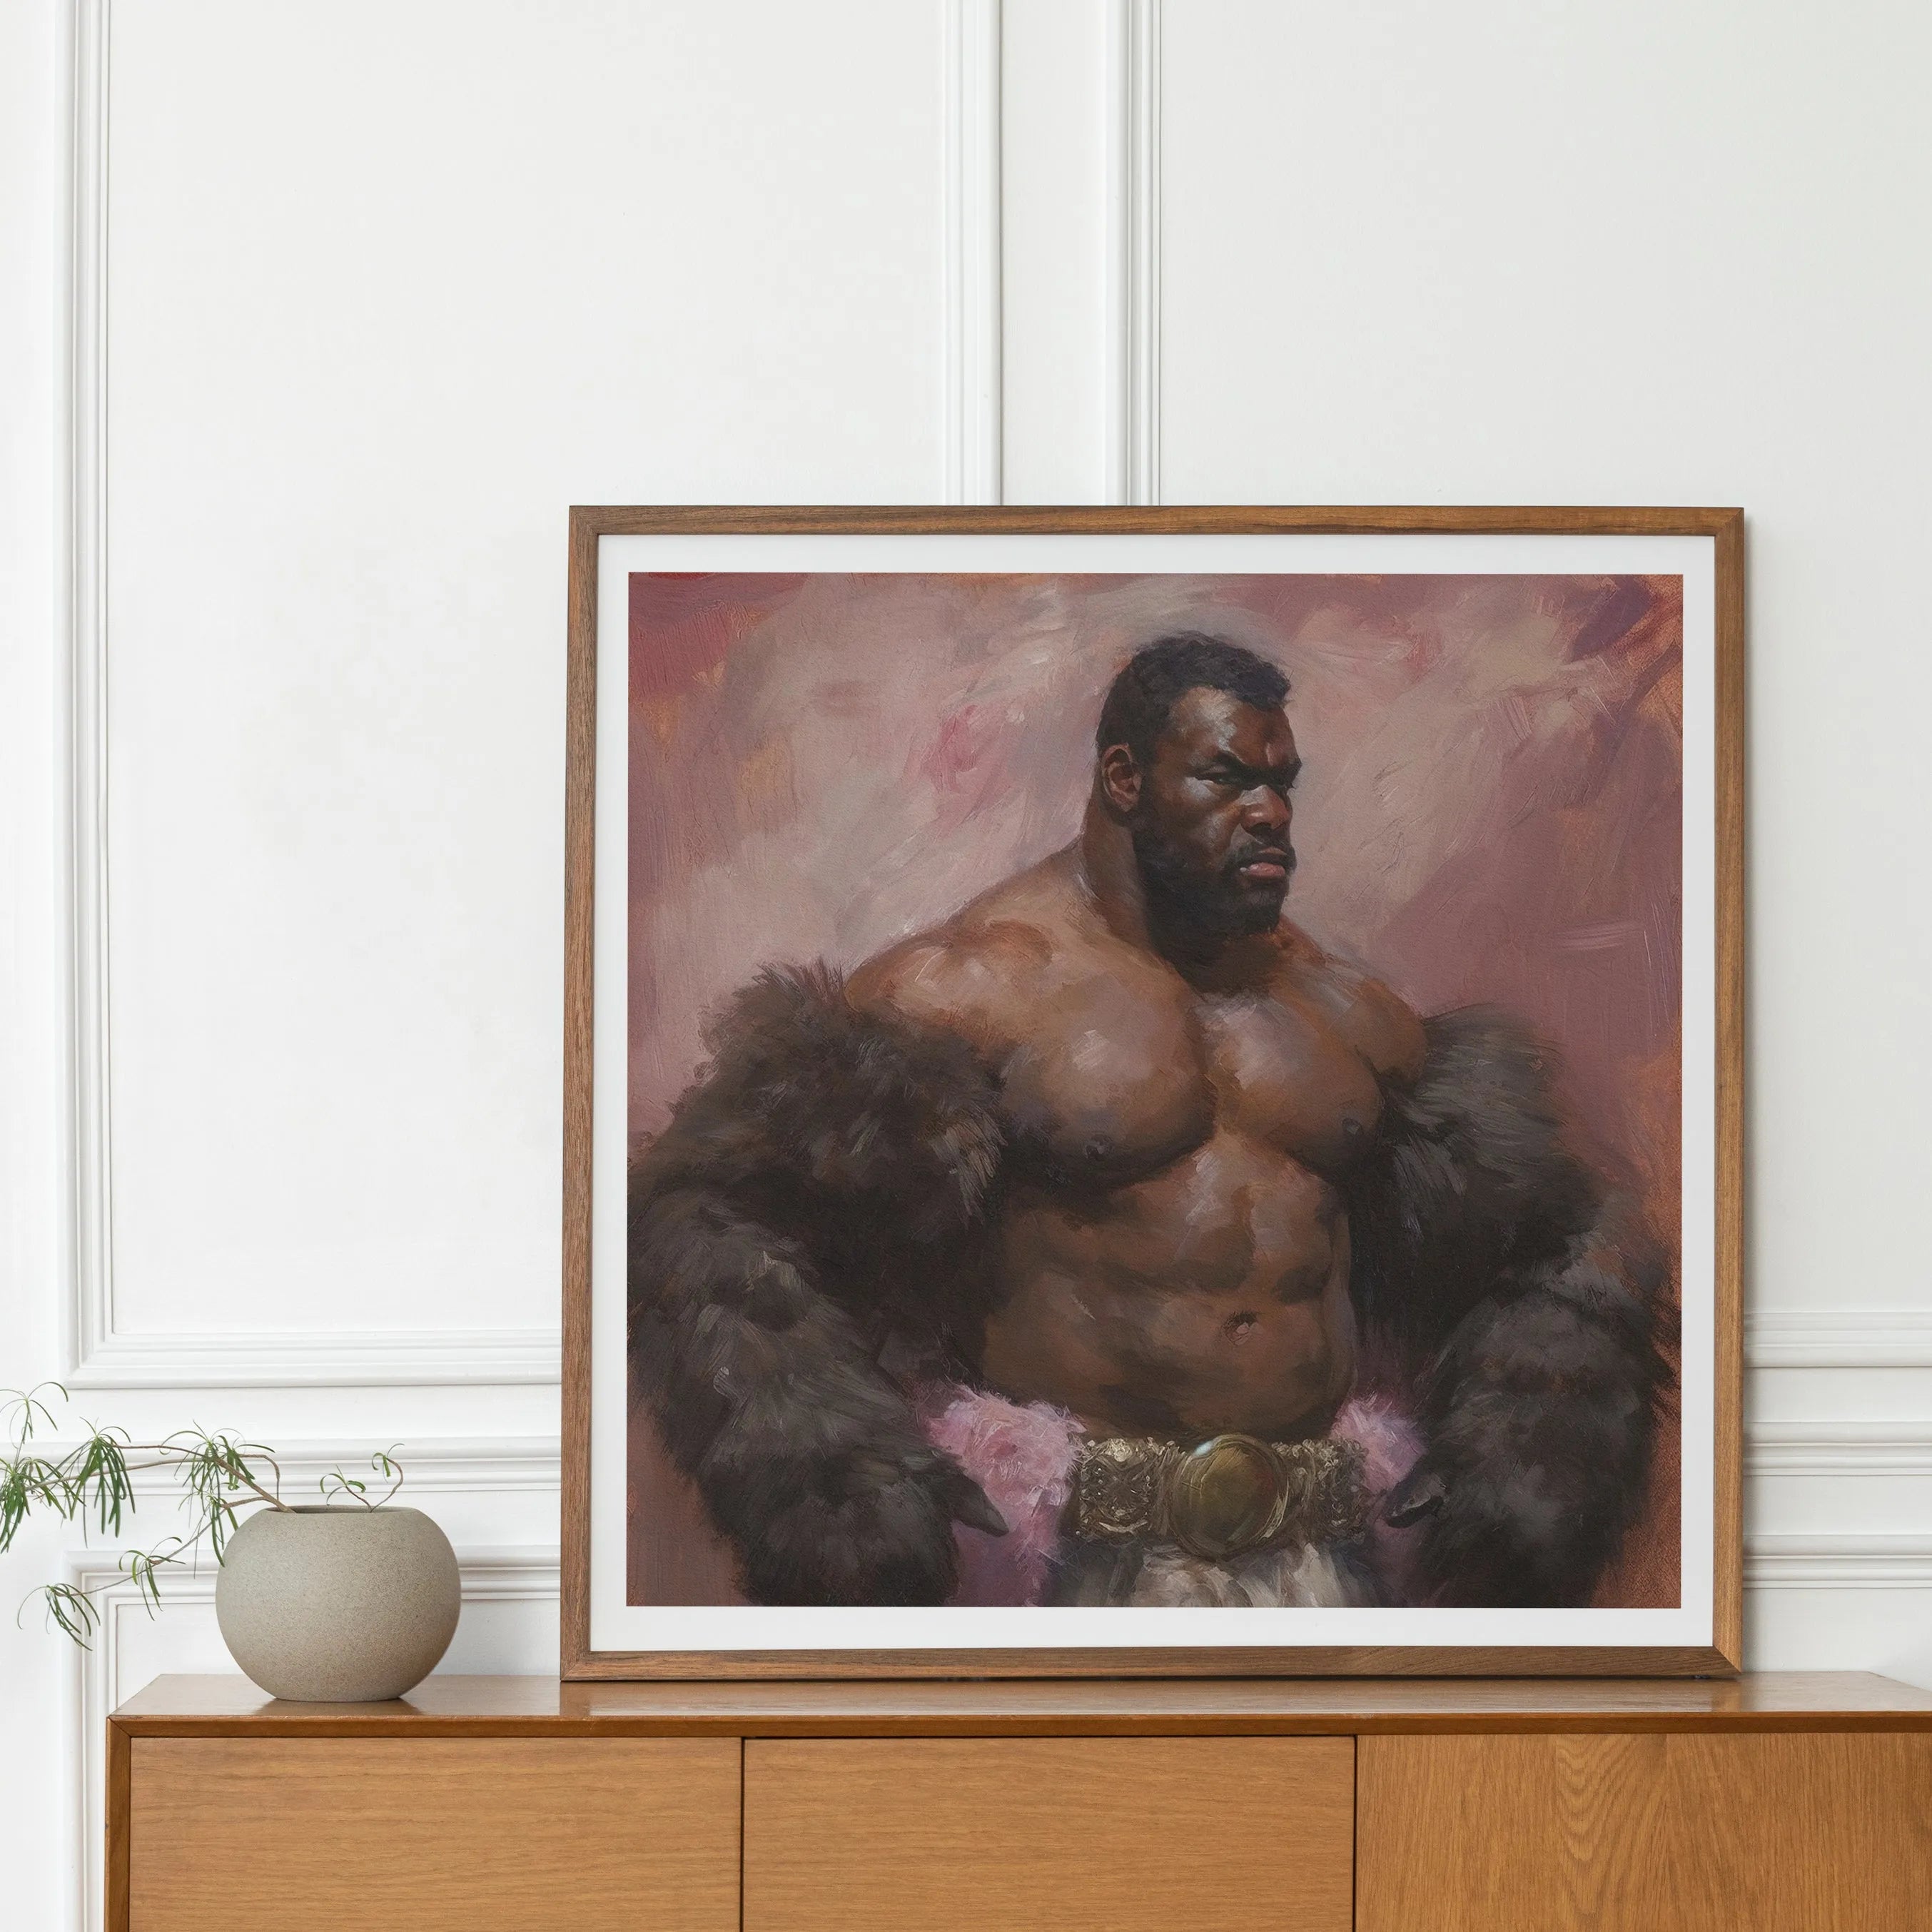 Papa Bear - Afroamerican Gaybear Muscle Daddy Art Print - Posters Prints & Visual Artwork - Aesthetic Art